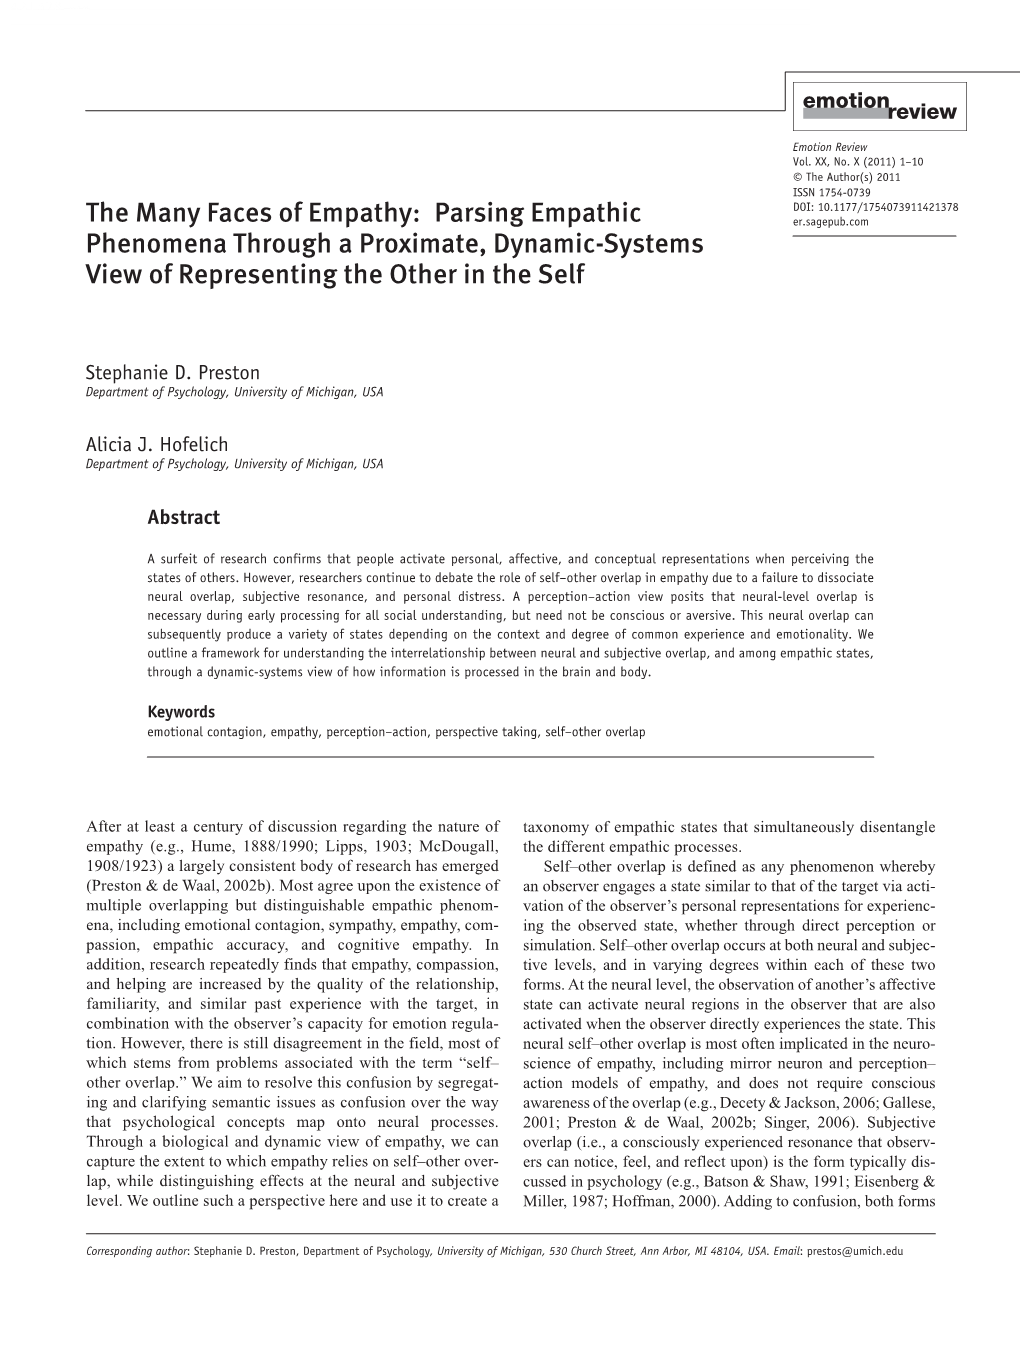 The Many Faces of Empathy: Parsing Empathic Phenomena Through A